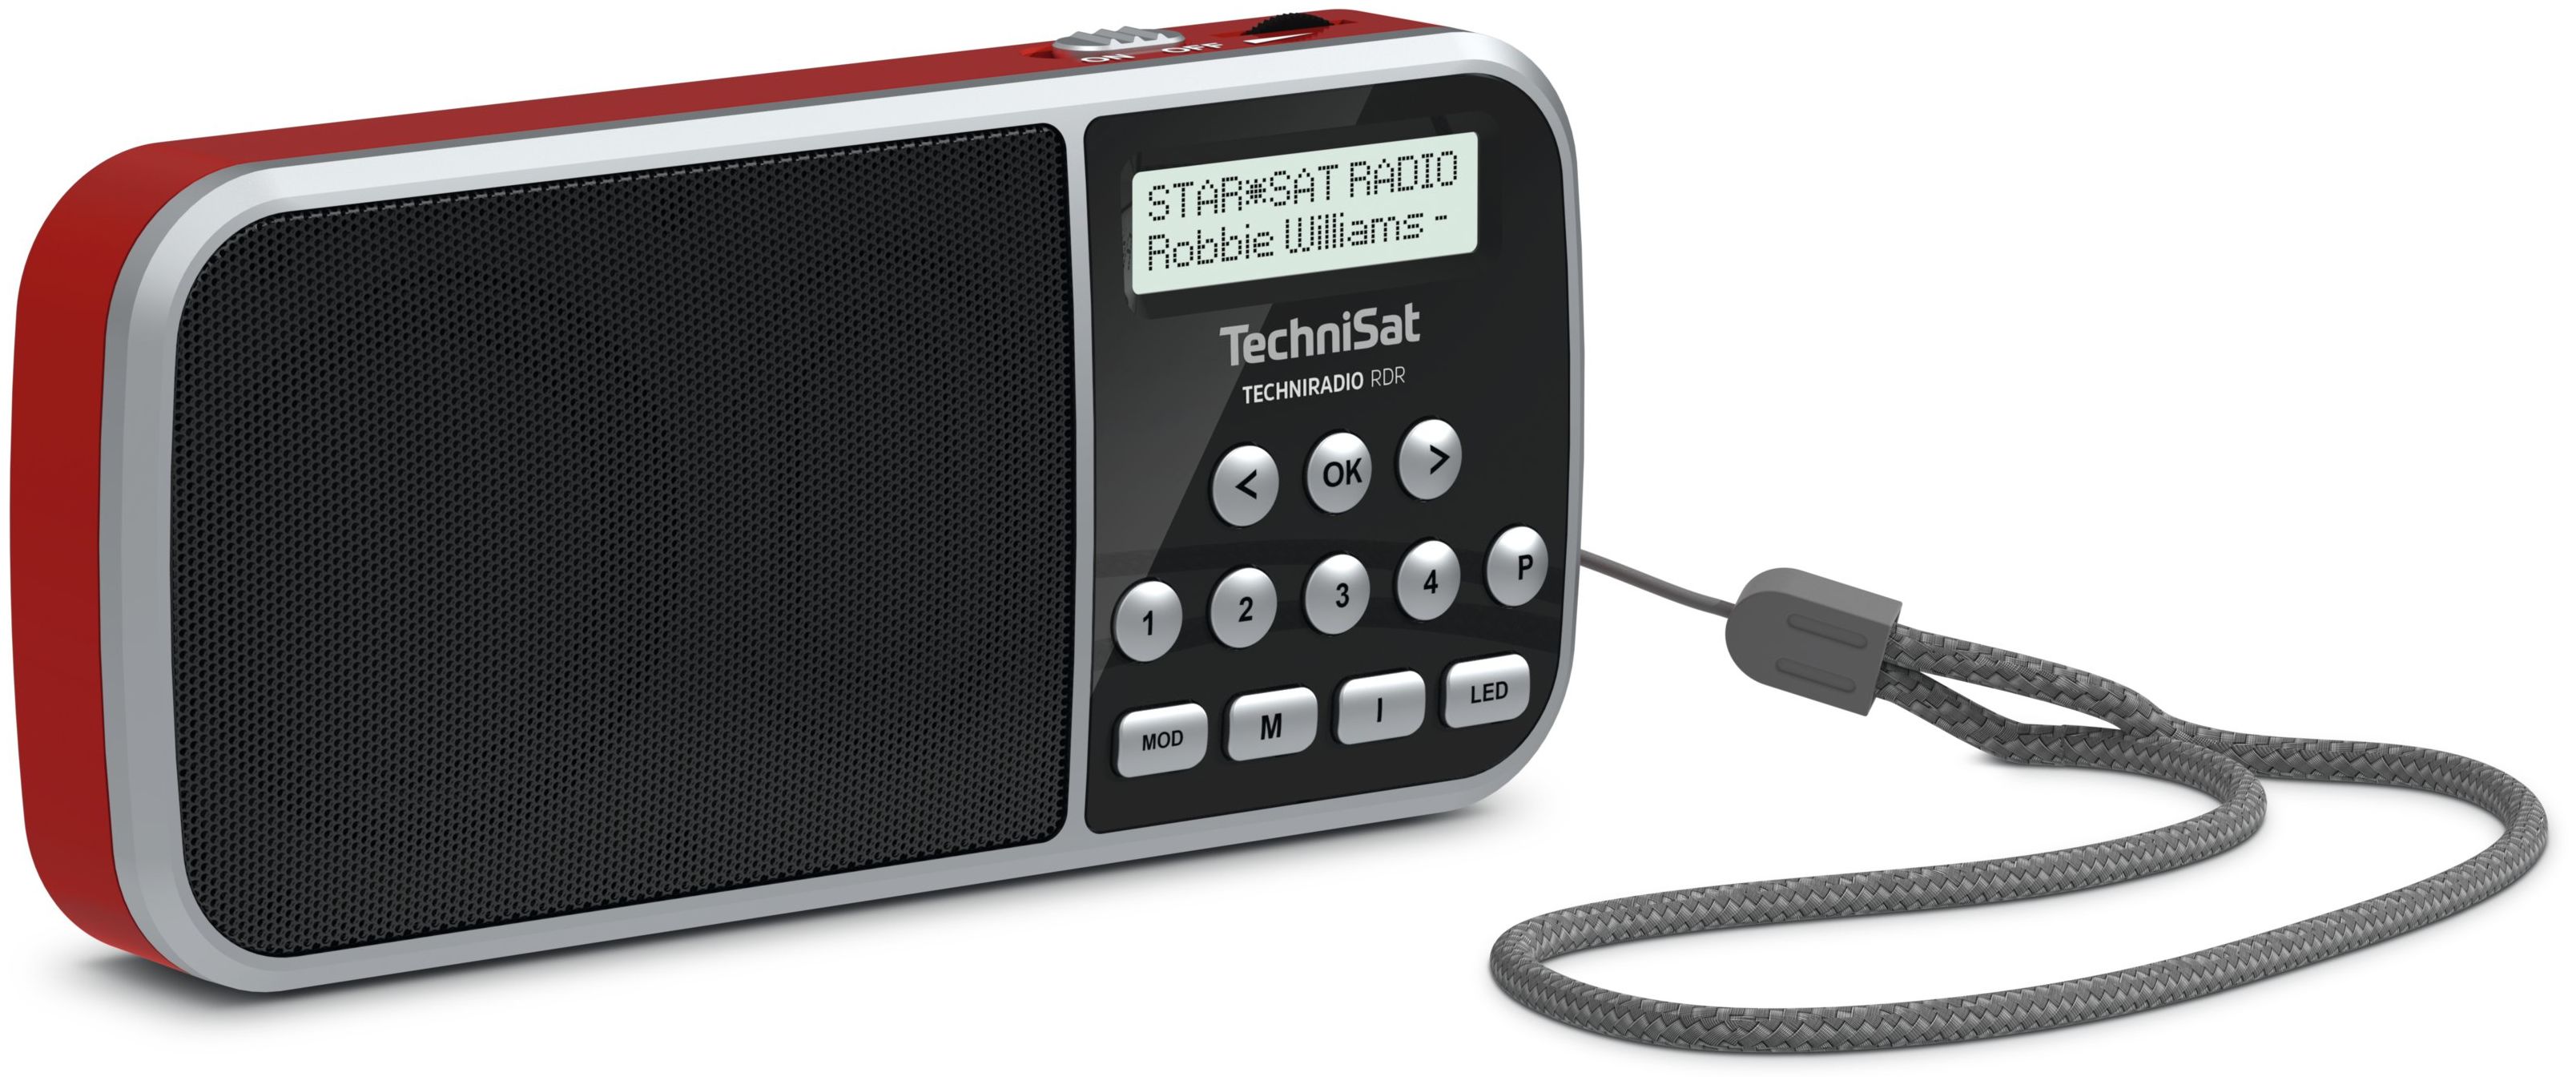 RDR TechniSat DAB+, Technomarkt Tragbar FM TechniRadio (Rot) von expert Radio